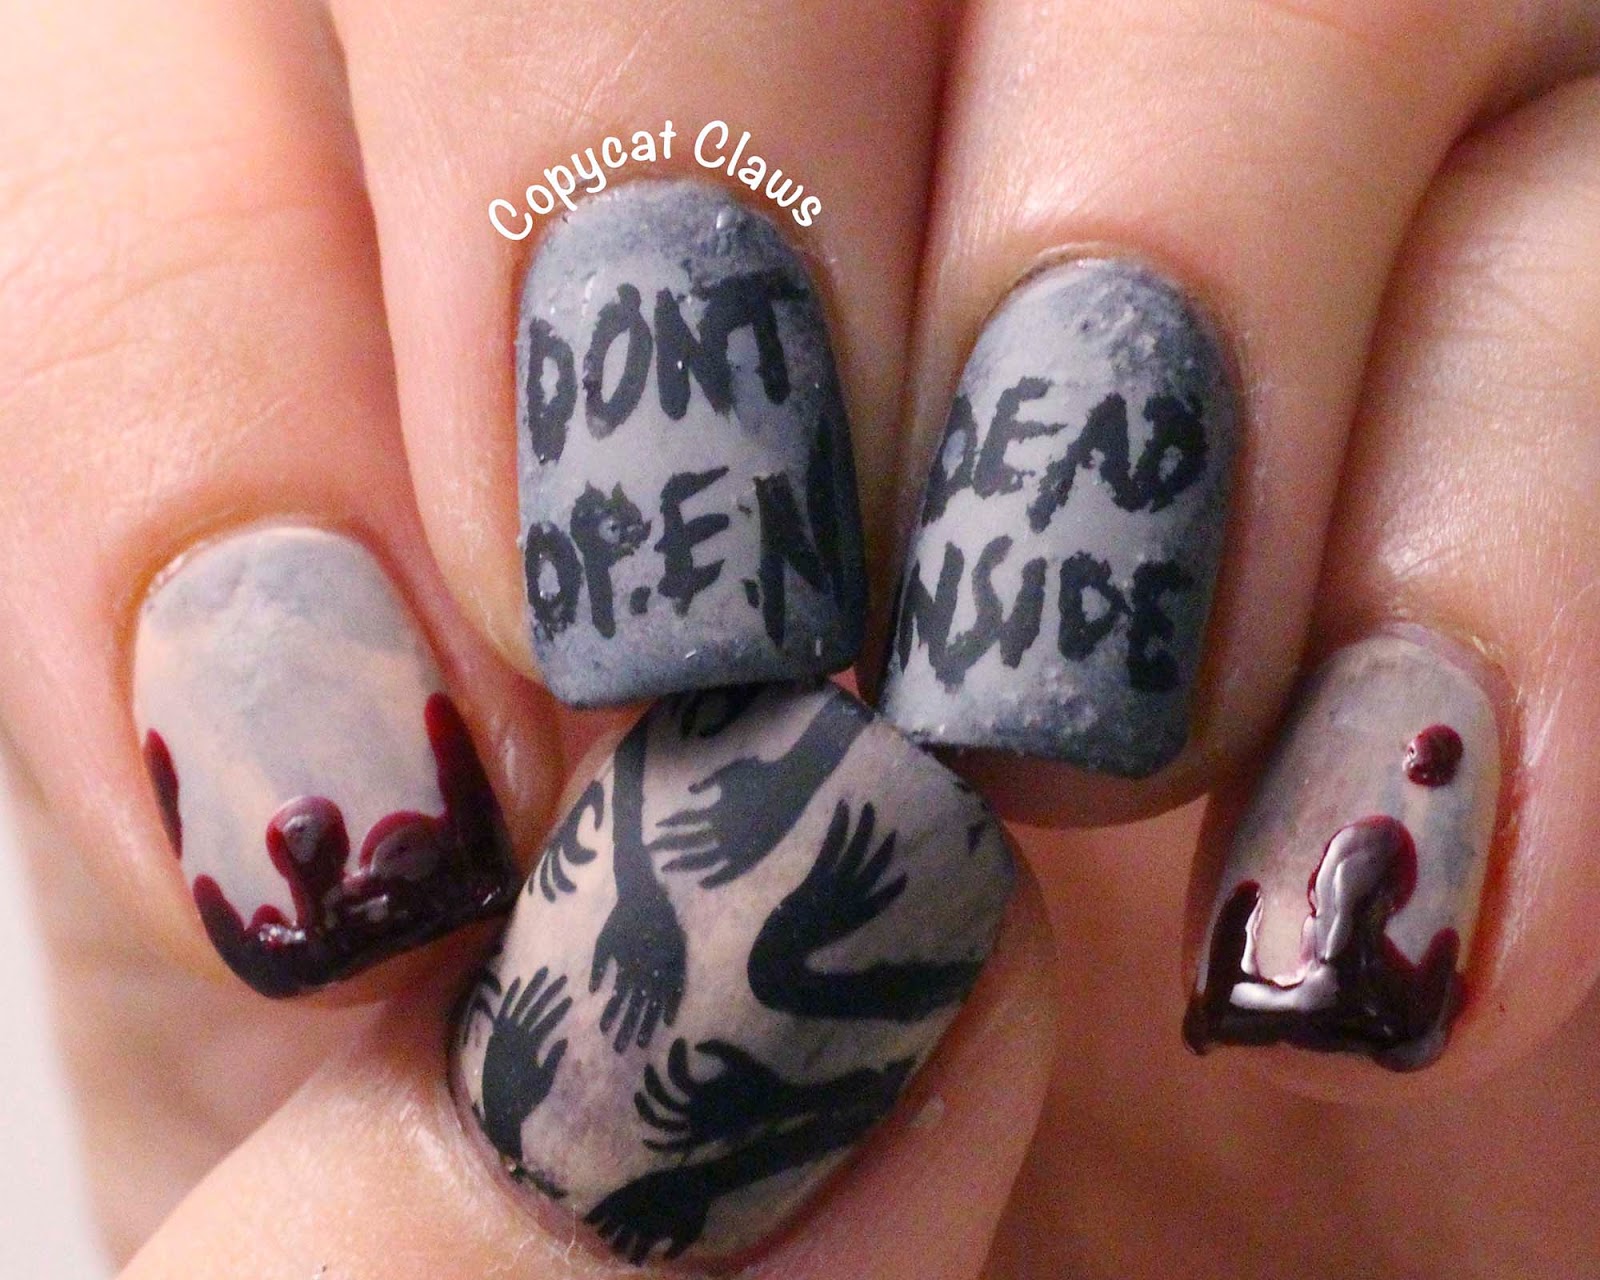 Walking Dead Inspired Nail Art Designs - wide 6